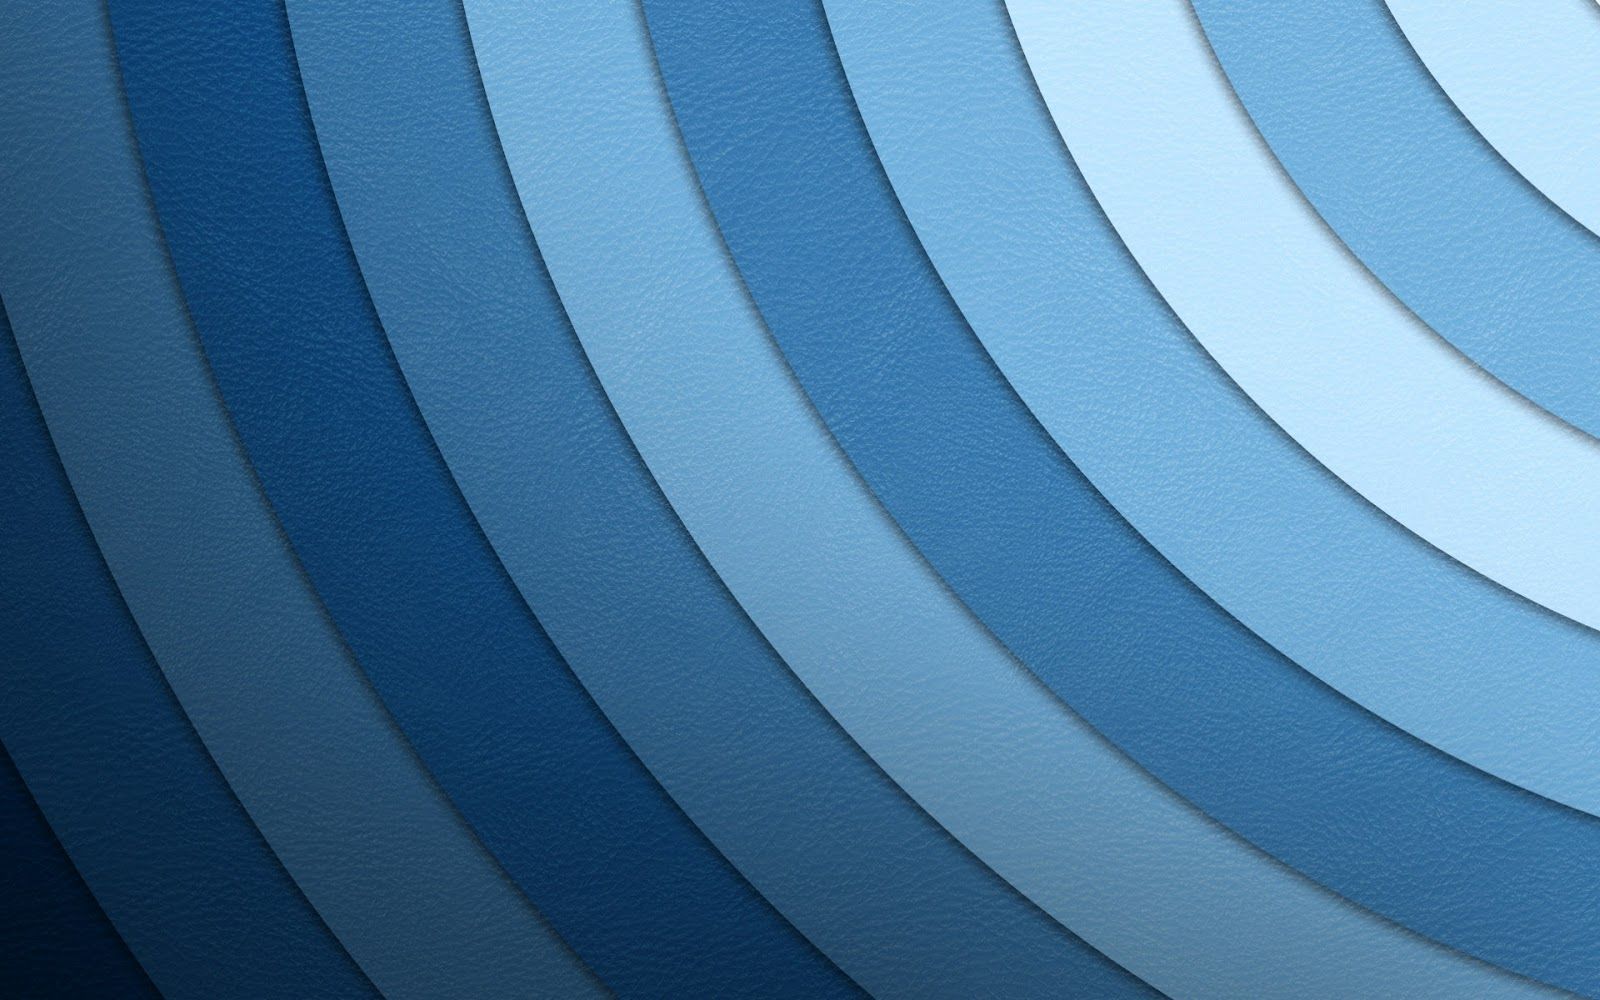 Blue wallpapers hd wallpaper download free wallpaper